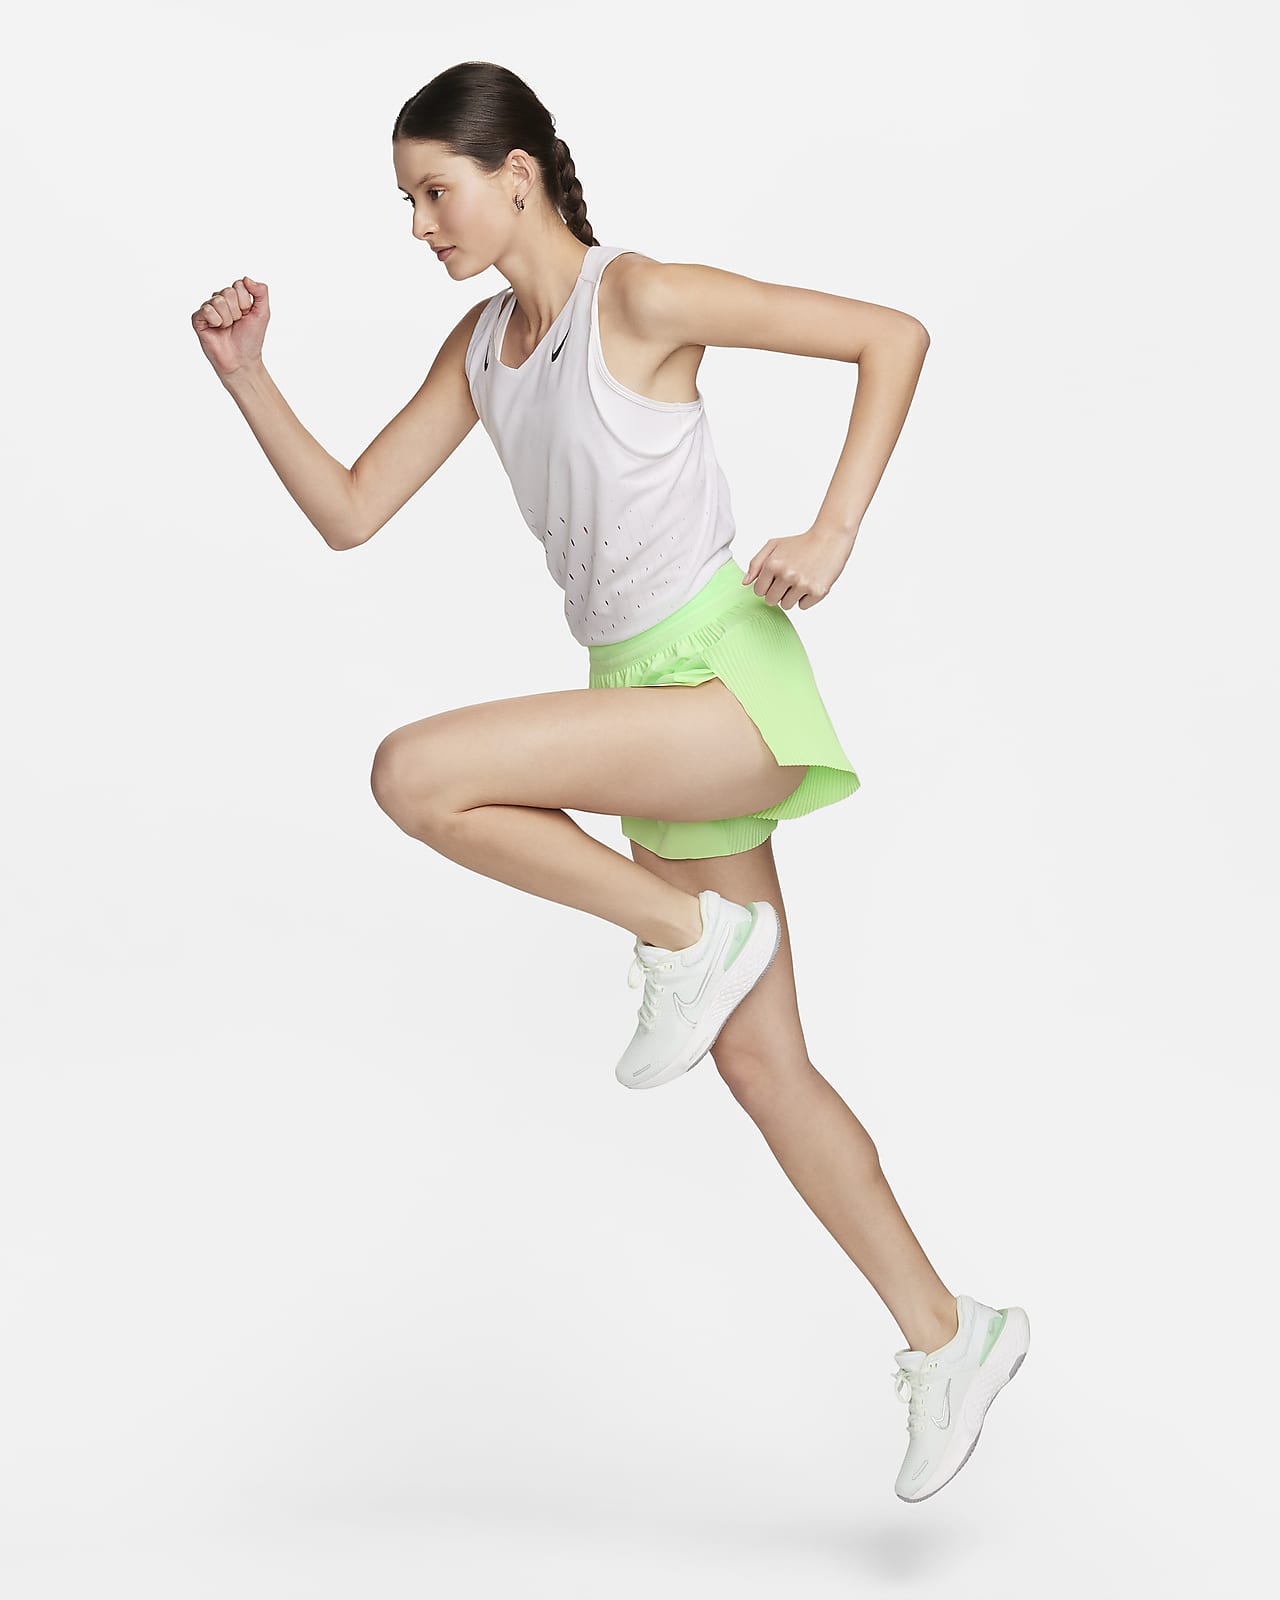 Nike / Women's AeroSwift Running Shorts